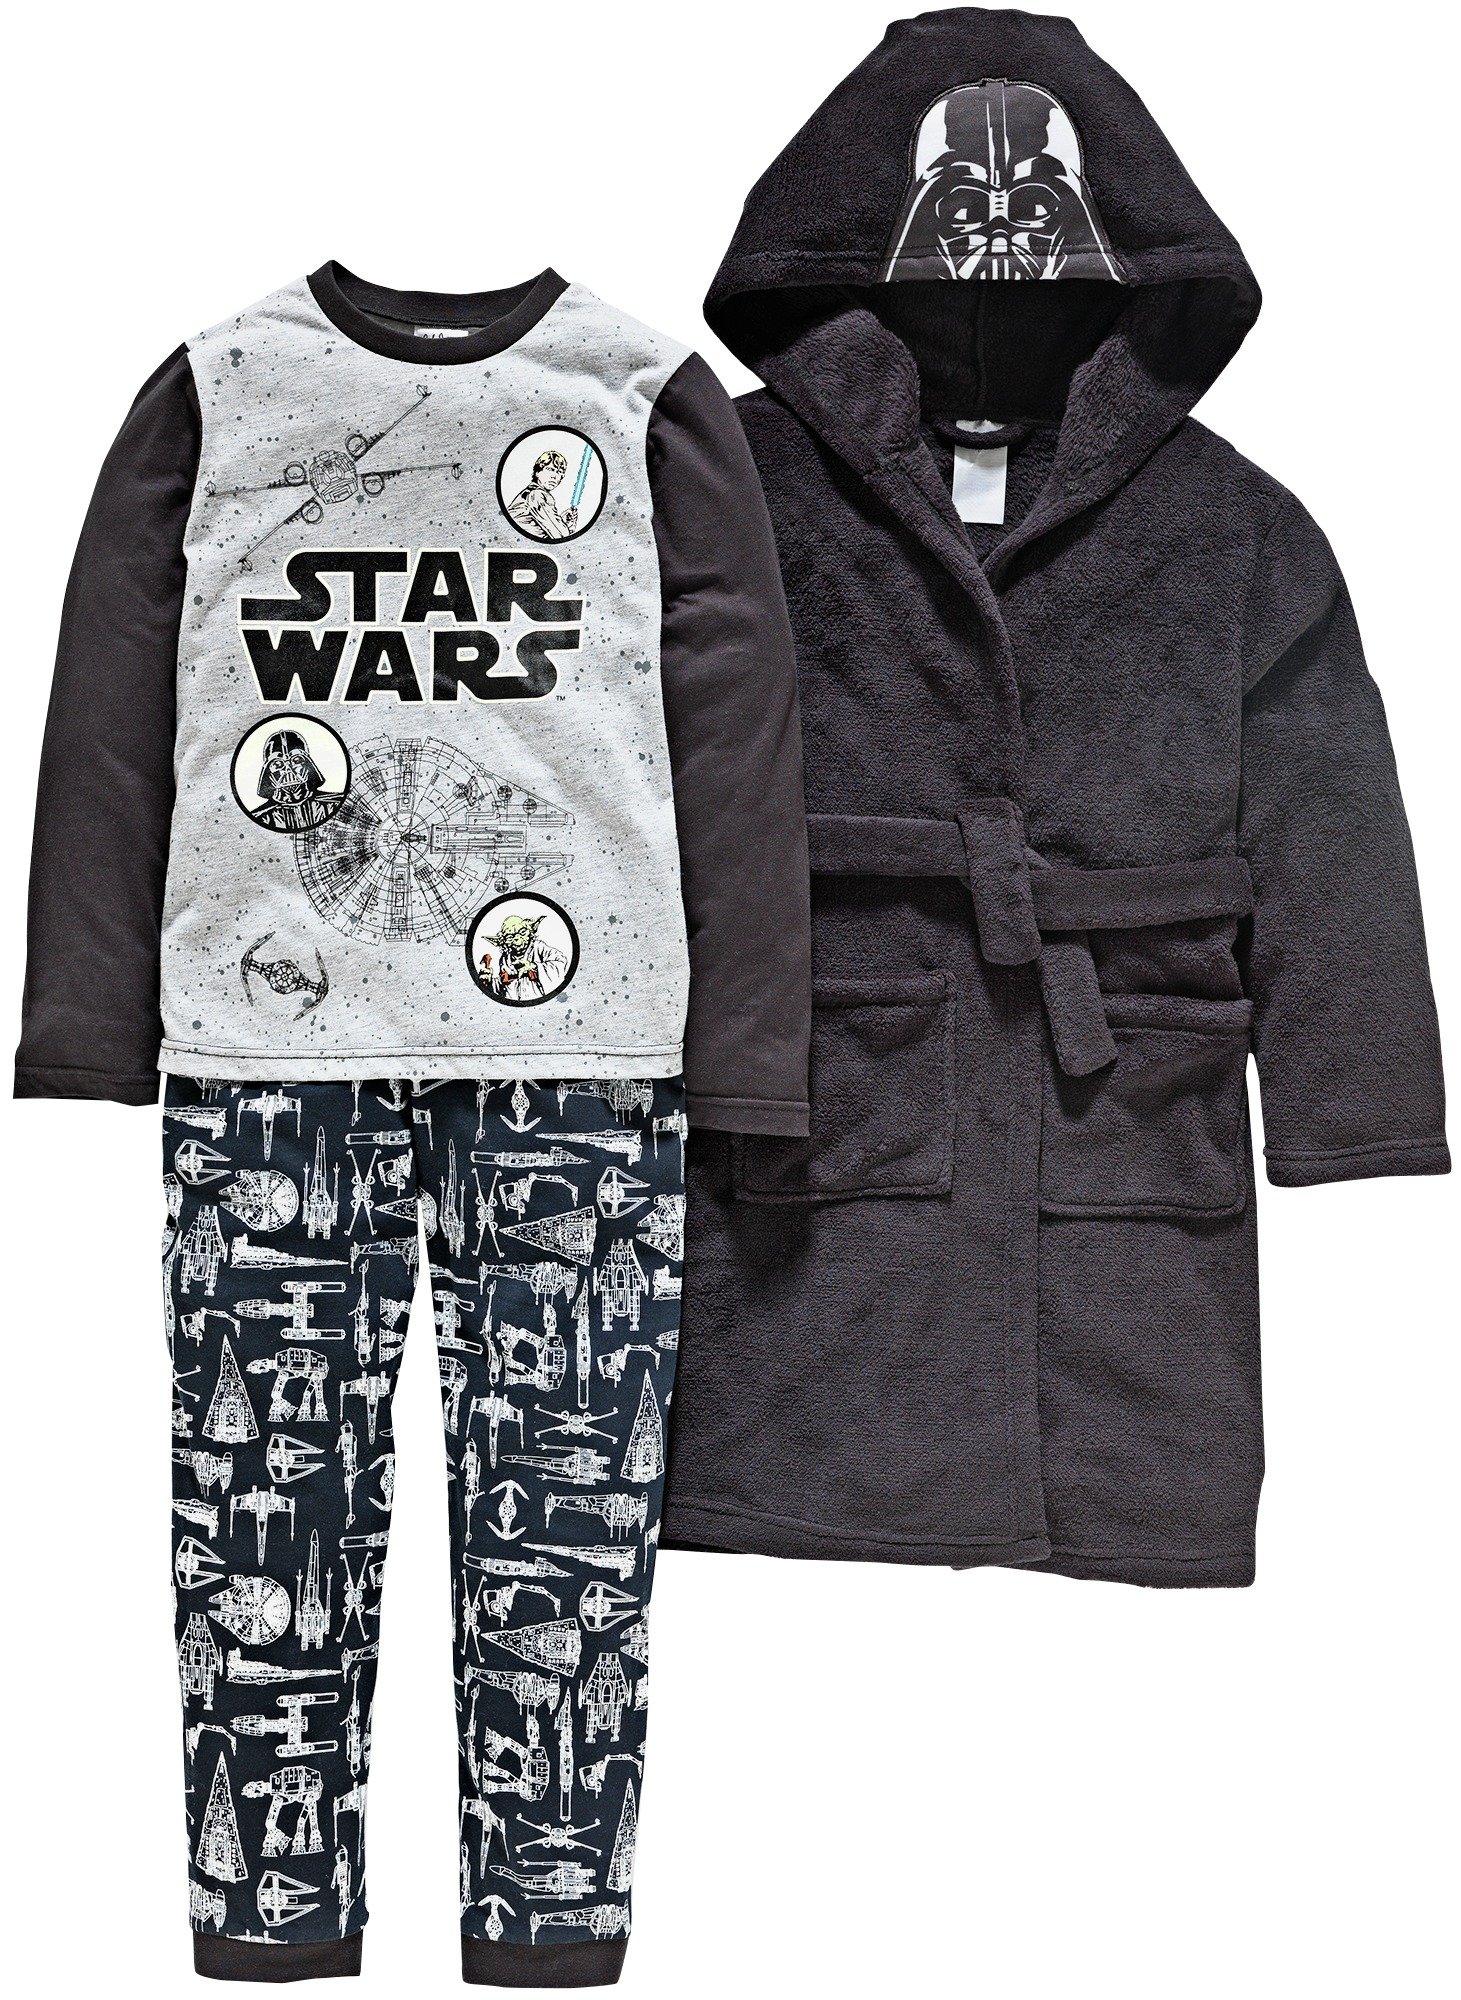 Star Wars Nightwear Set - 11-12 Years